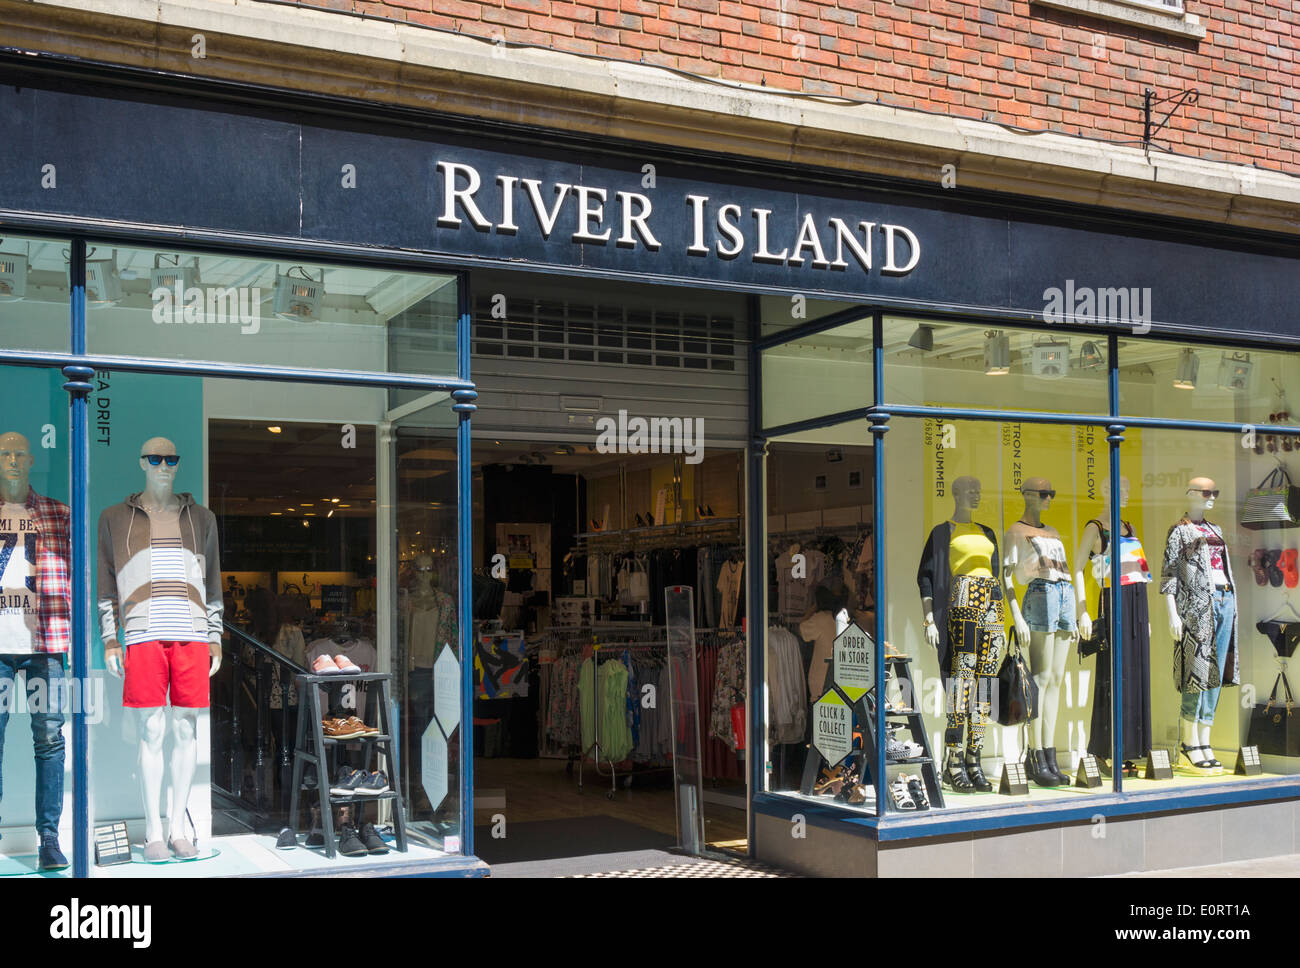 River Island Chain Bekleidungsgeschäft, England, UK Stockfoto